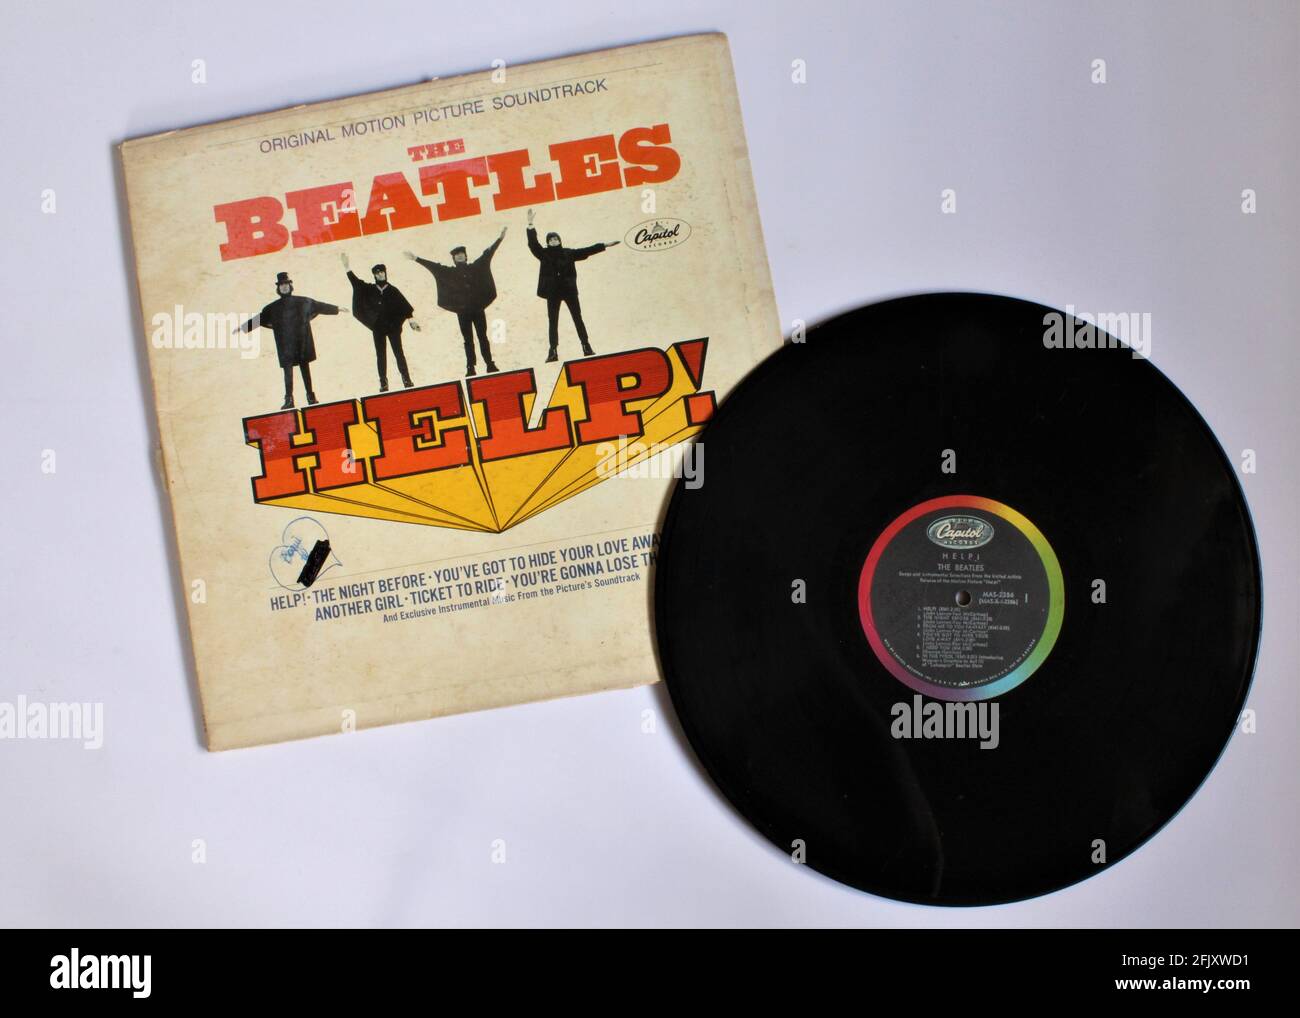 The Beatles Original Motion Picture Soundtrack Help! music album on vinyl record LP disc. English rock music. Stock Photo